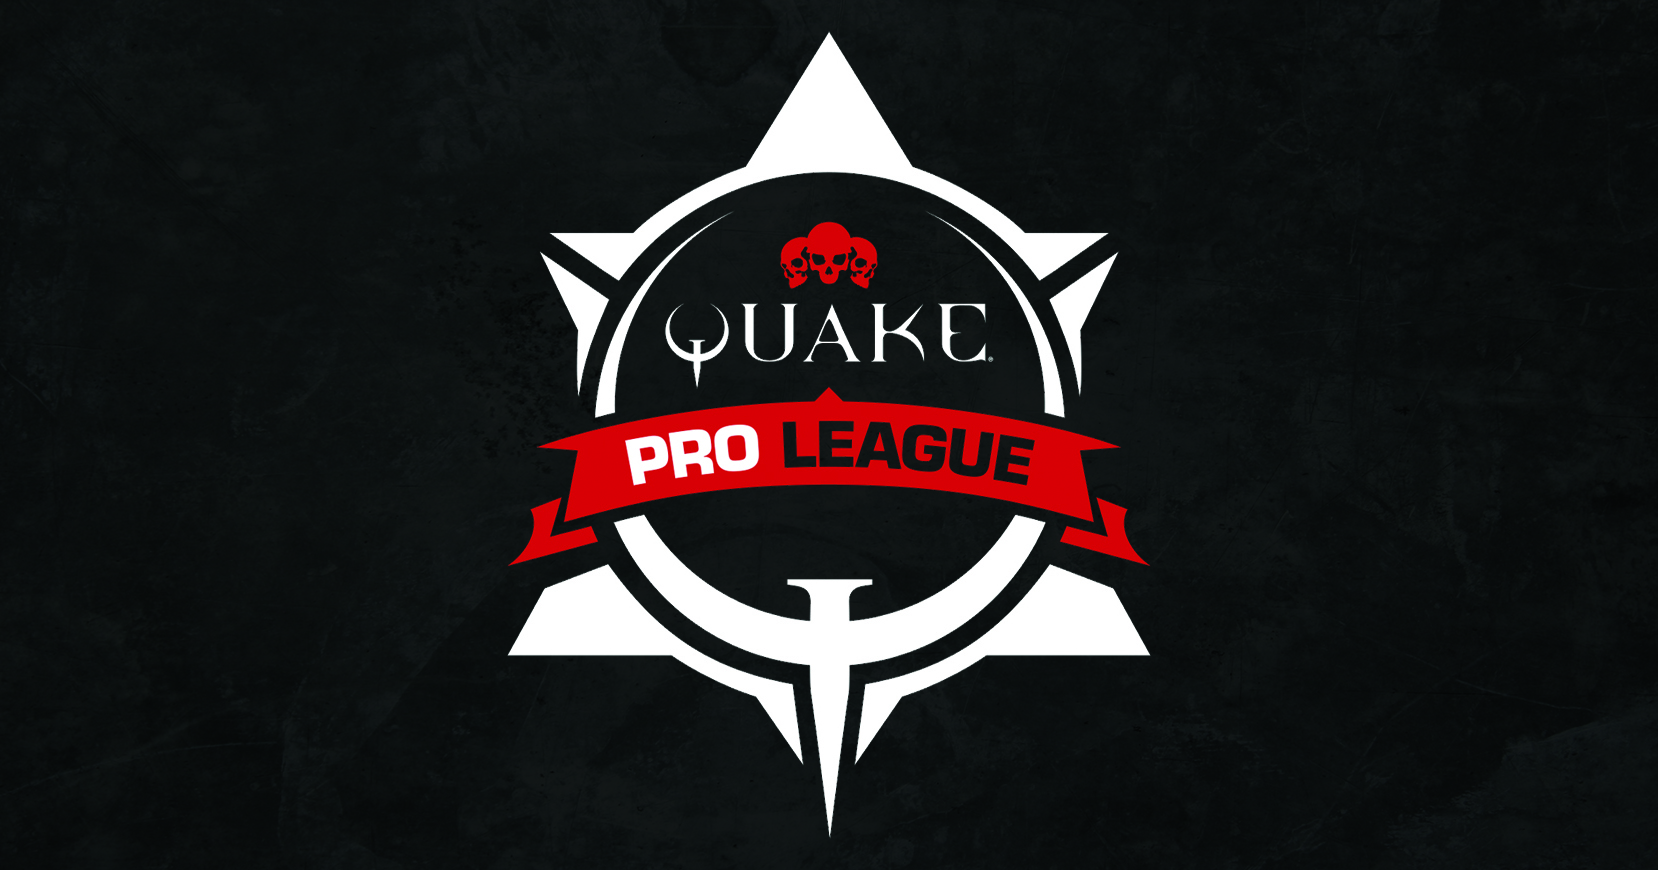 Quake Pro League Stage4 Finals アメリカ最終予選 日本 Royalruby はベスト12で本戦出場ならず Negitaku Org Esports